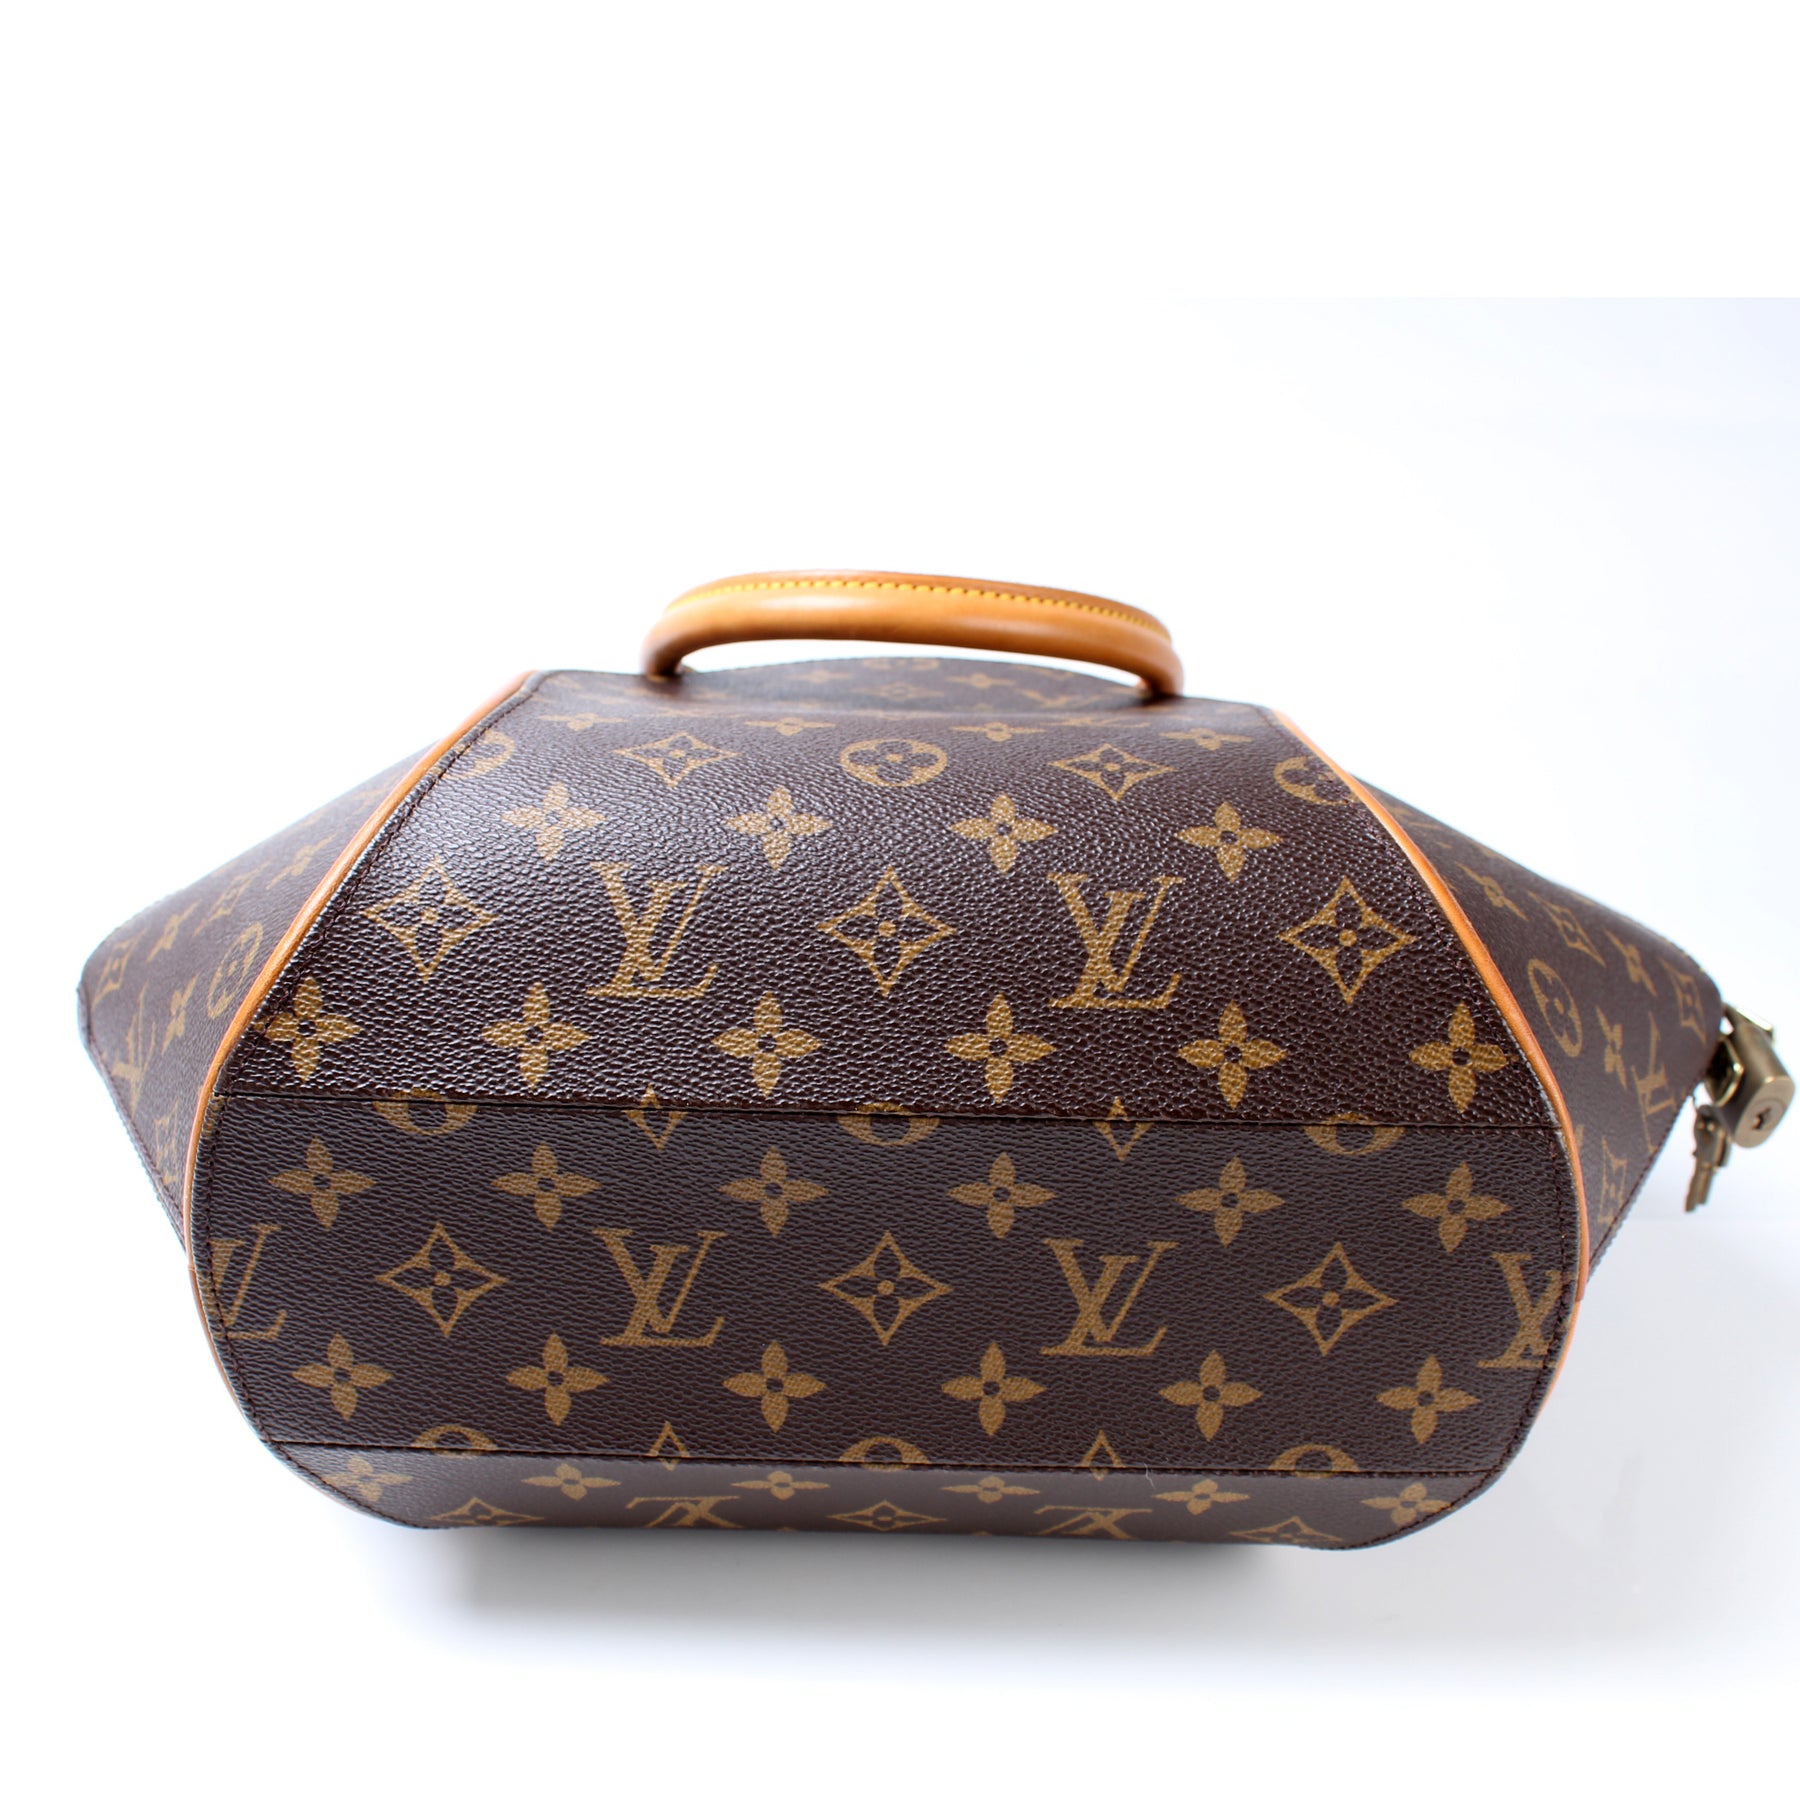 Buy Luxury Louis Vuitton Monogram Ellipse MM Handbag Online